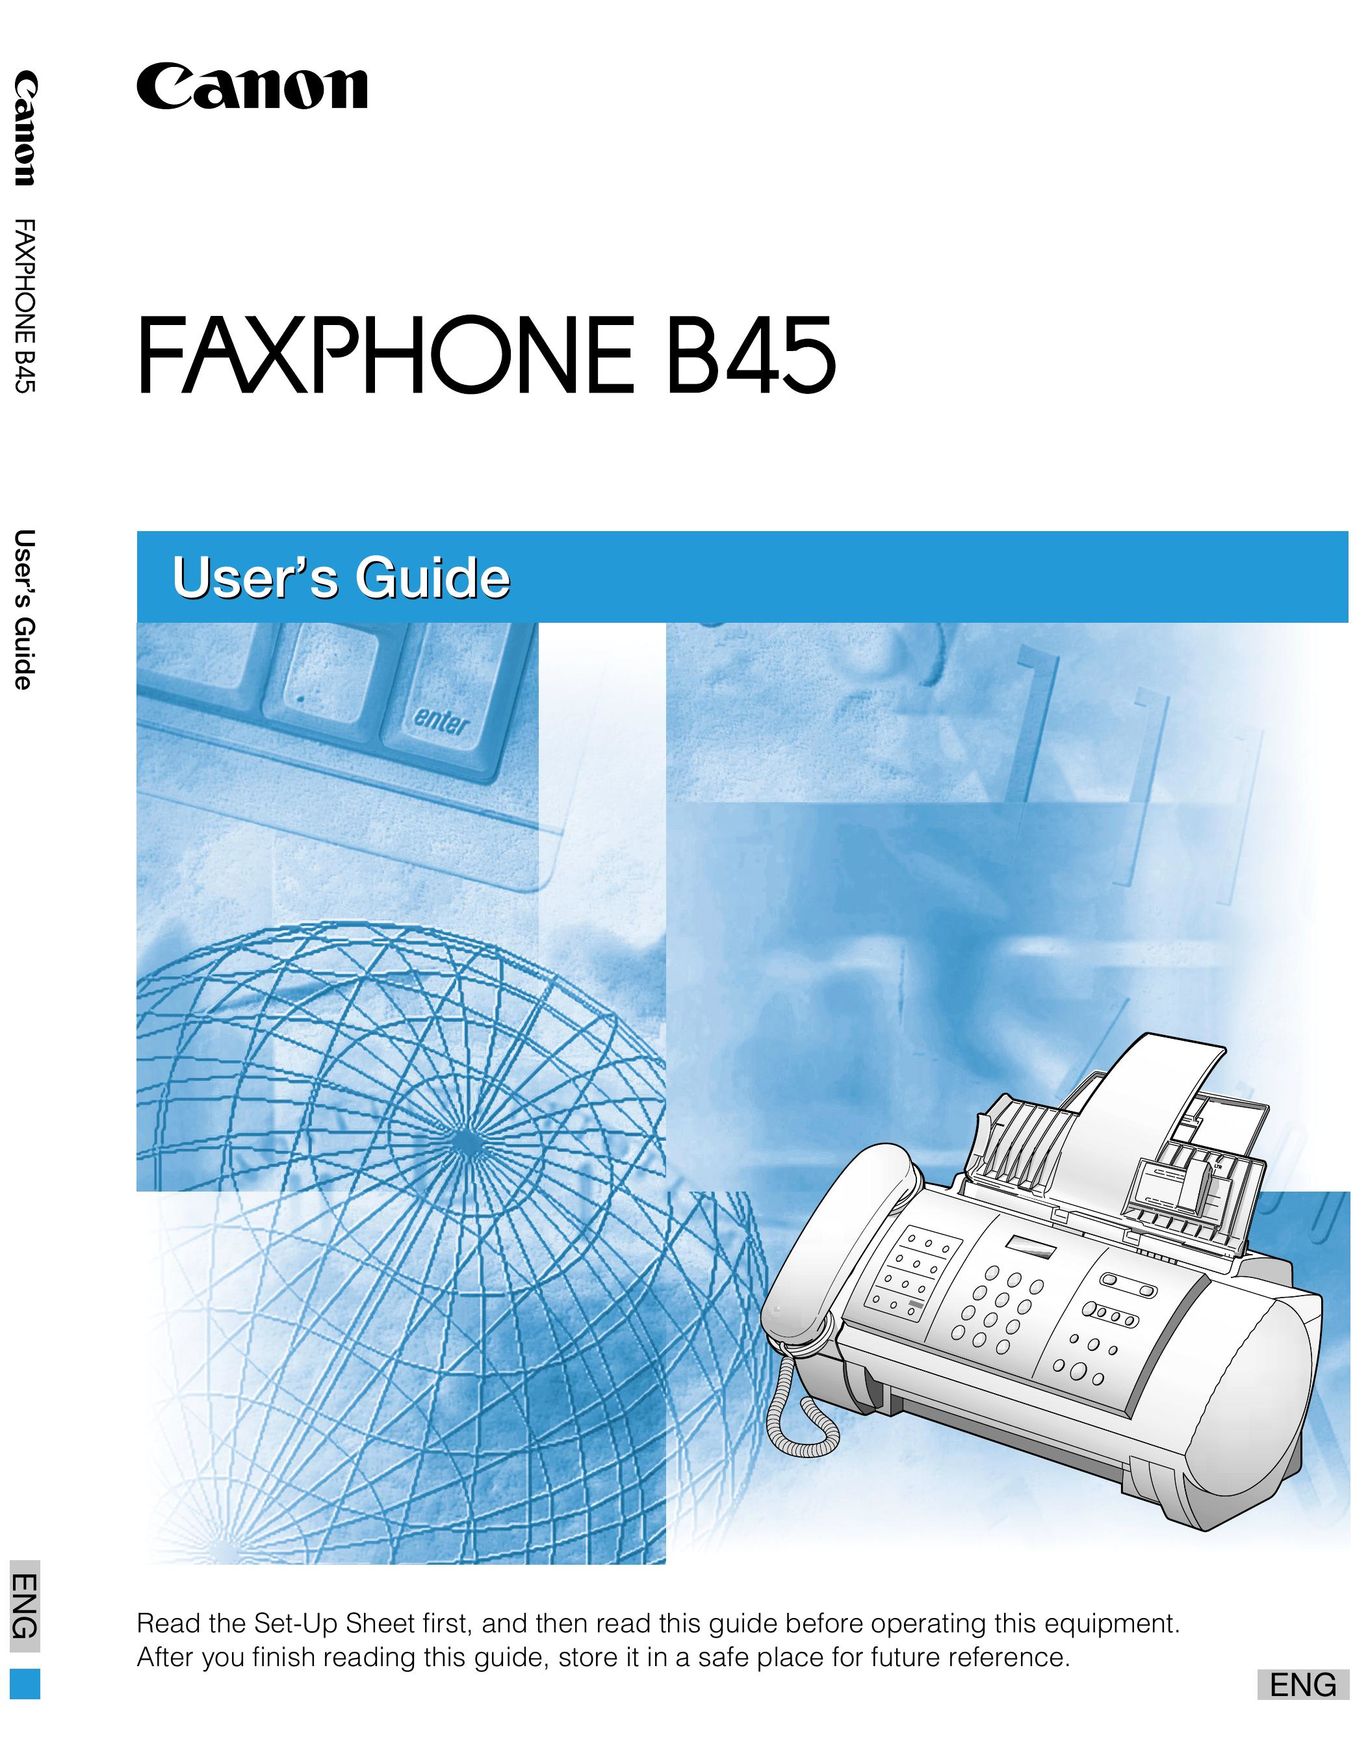 Canon B45 Fax Machine User Manual